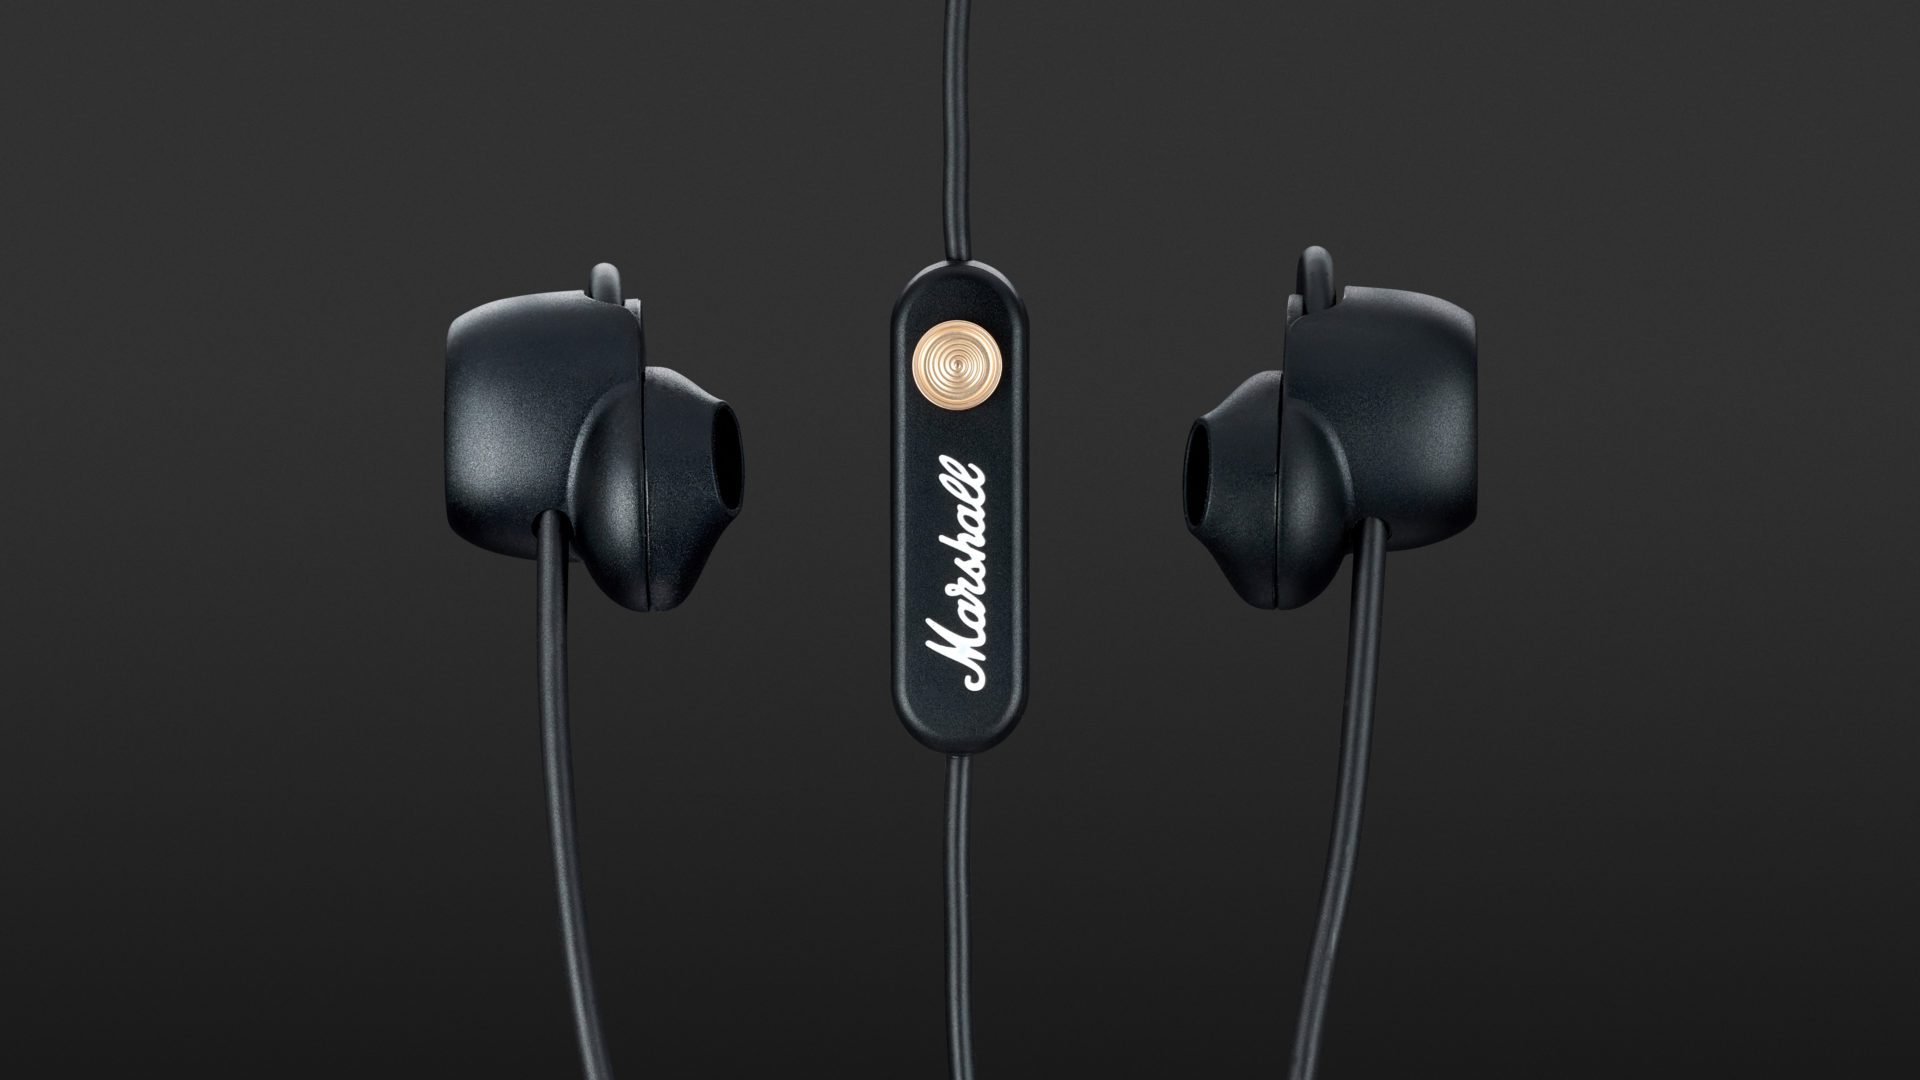  Marshall Minor II Bluetooth In-Ear Headphone, Brown